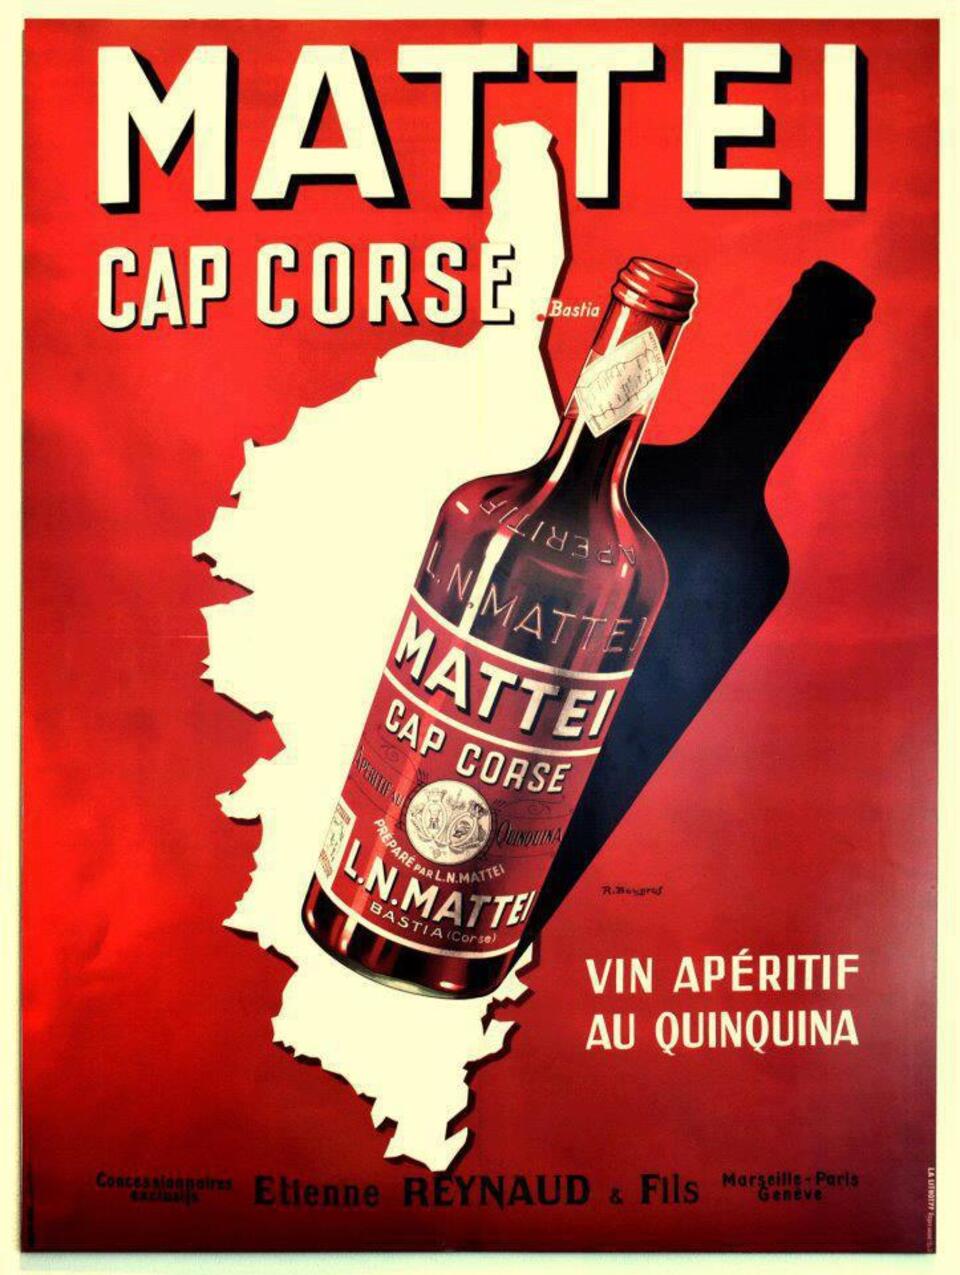 Corse Vin Corse Apéritif - Aléria L.N. - Mattei Distillerie Cap - Tonique